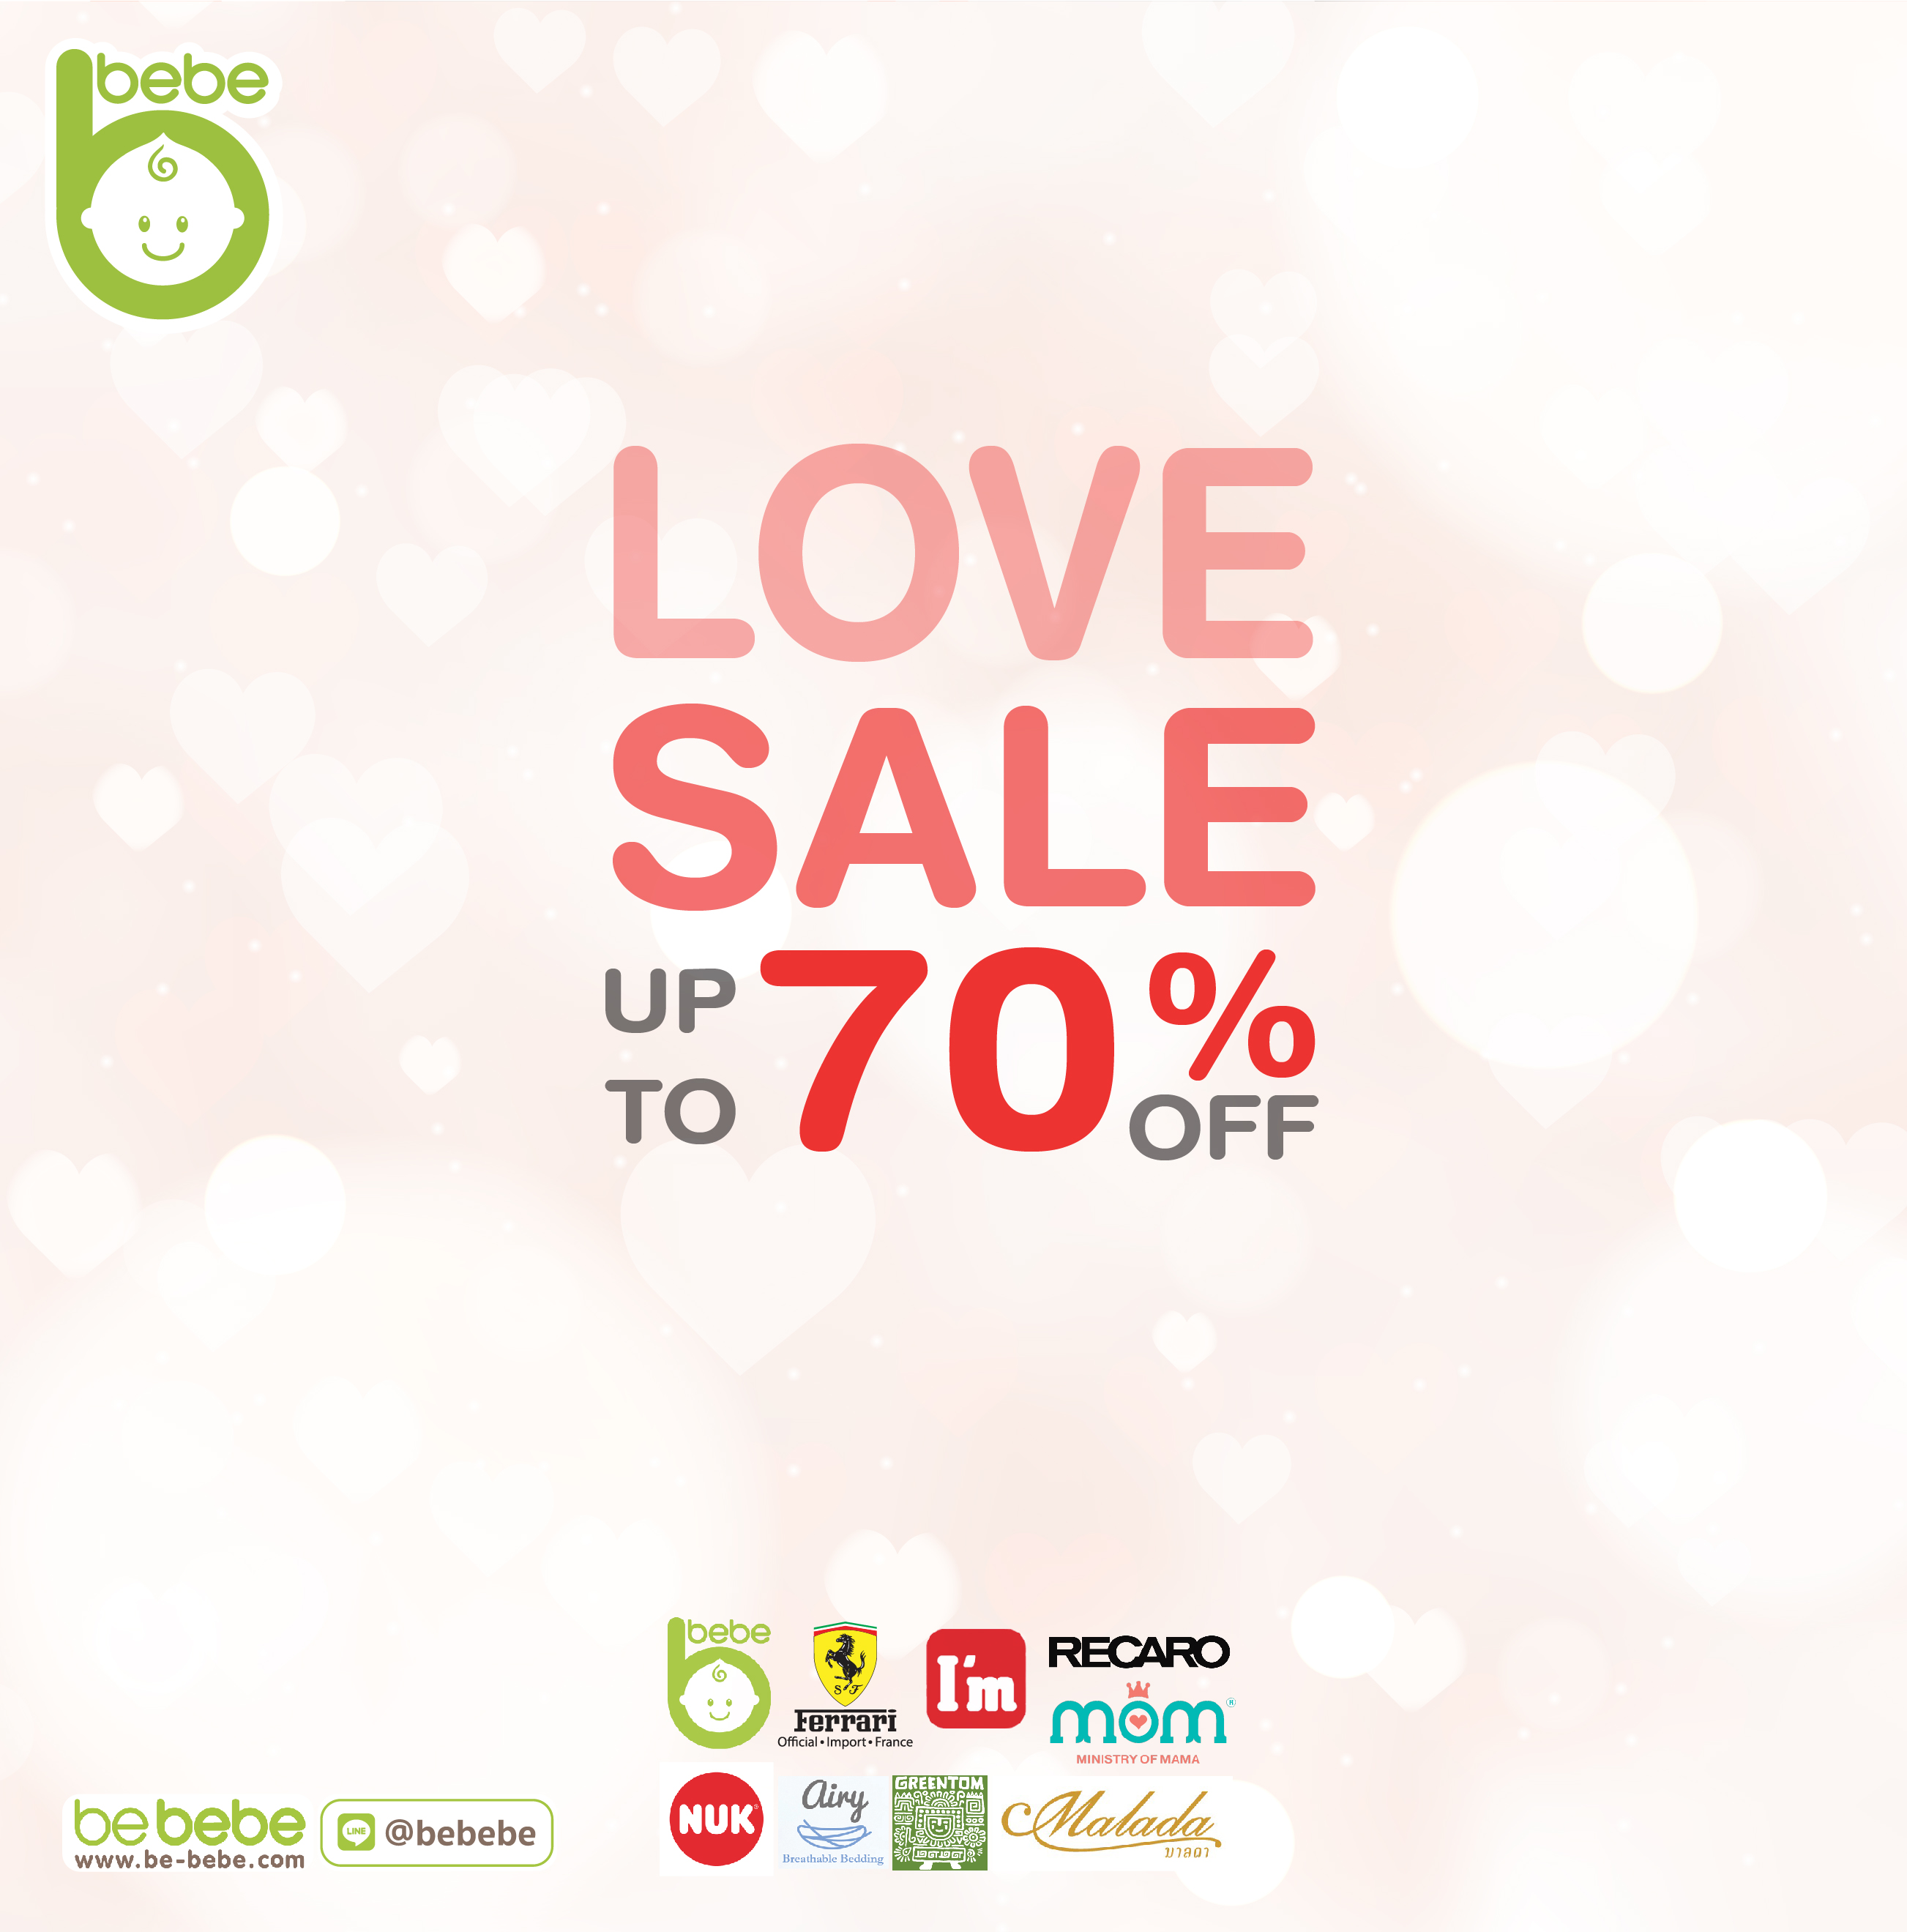 Love sale